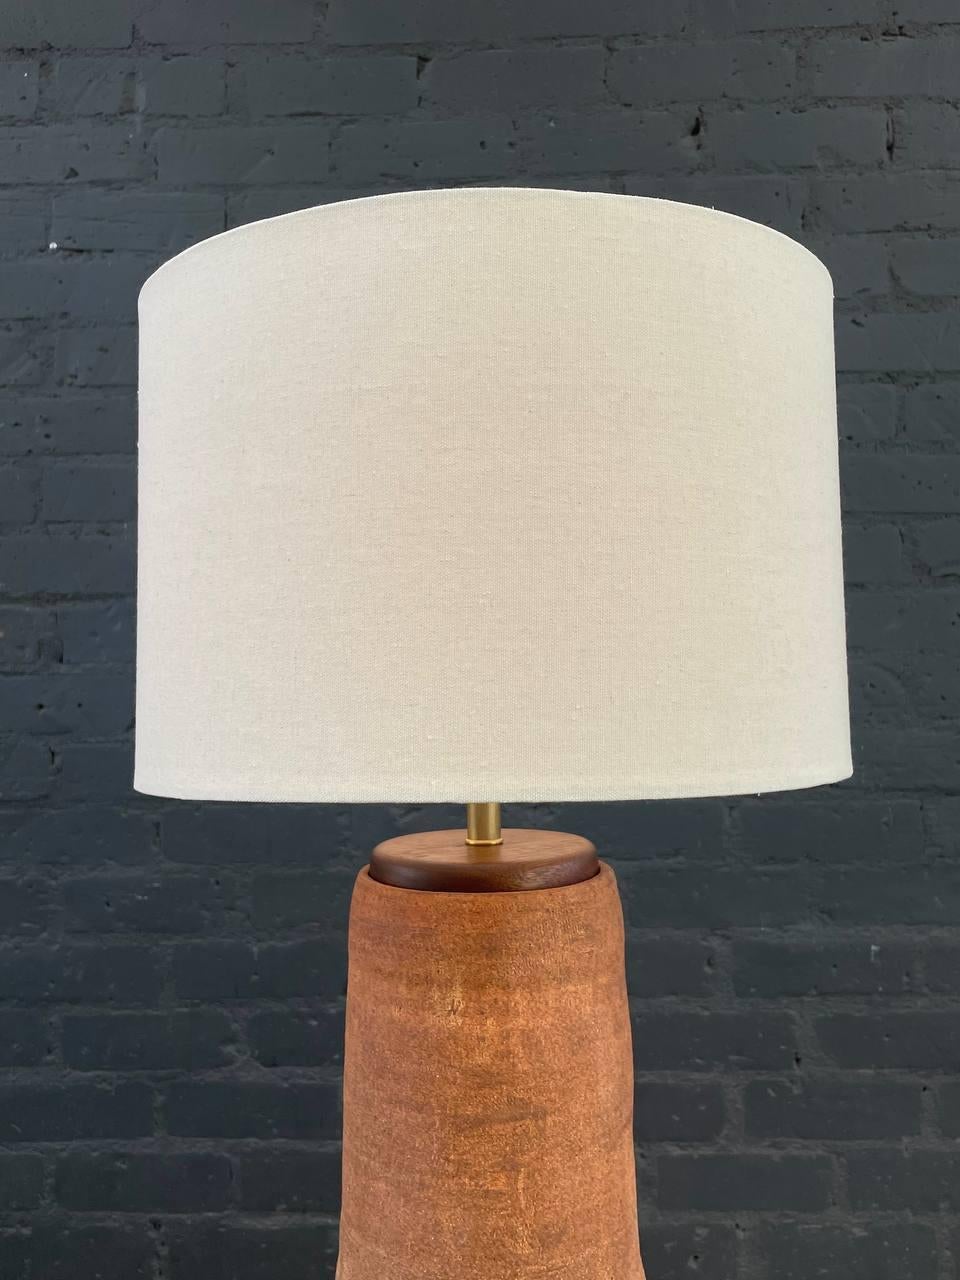 American Mid-Century Modern Ceramic Orange Rust Glaze Table Lamp For Sale